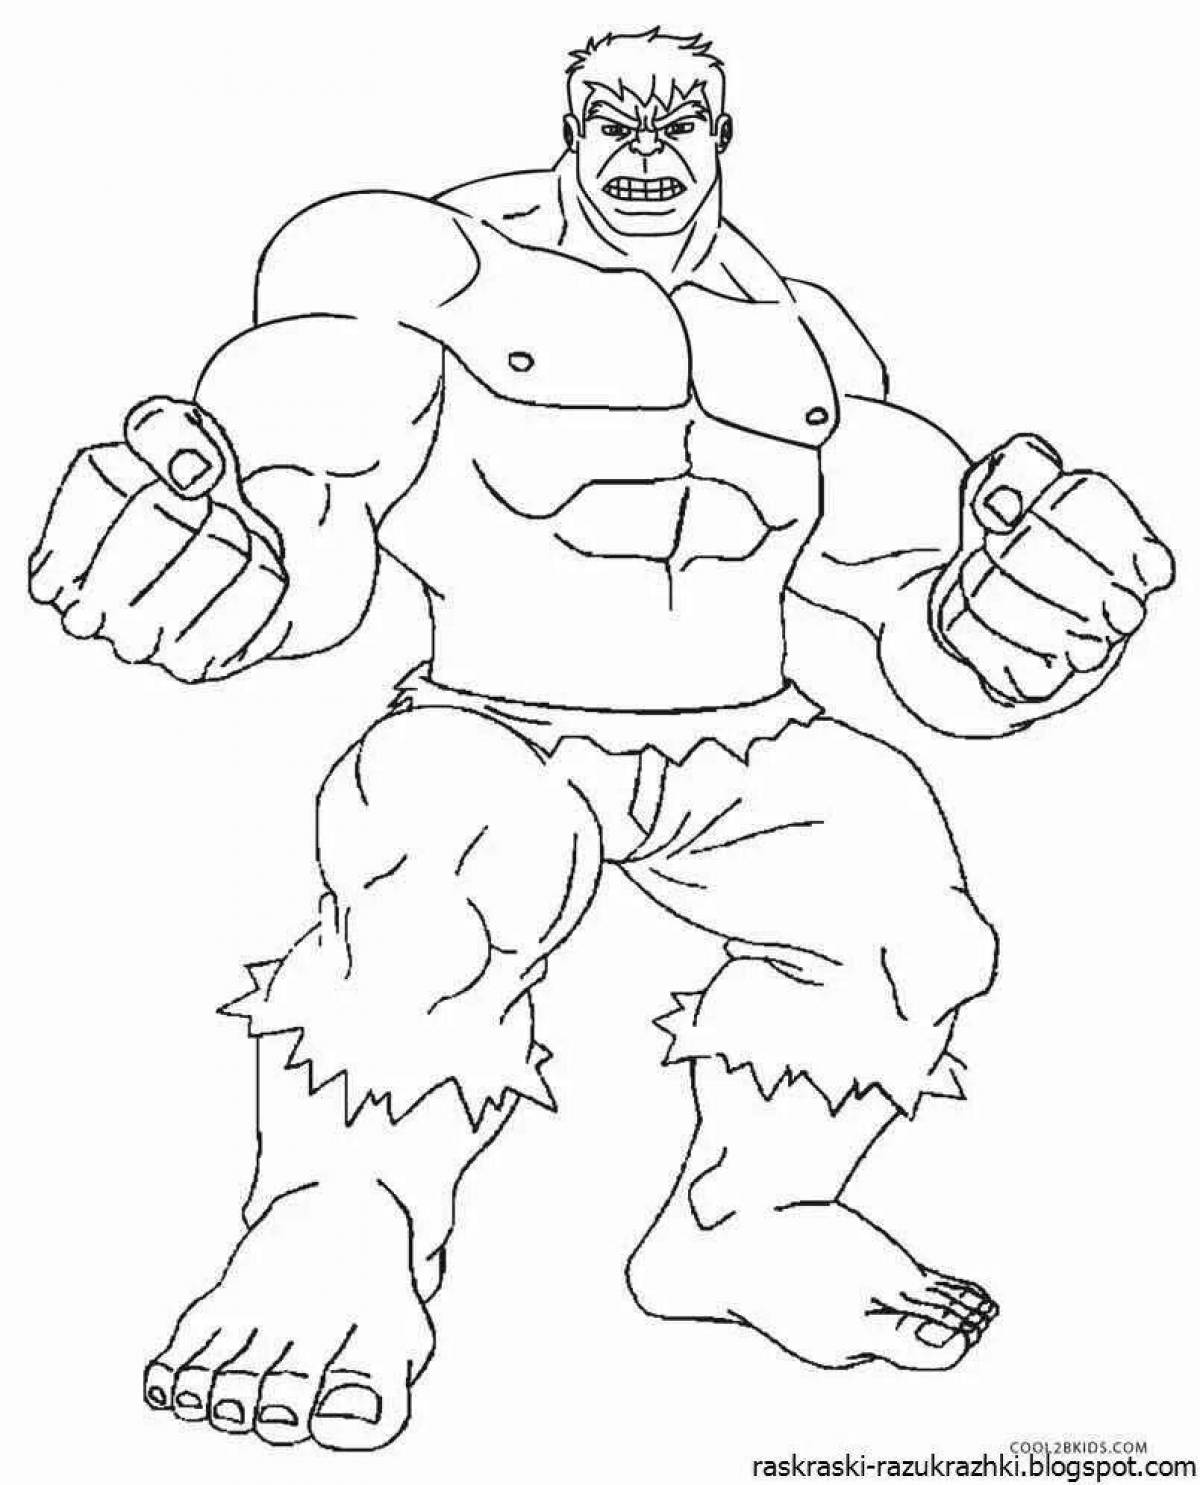 Wonderful Iron Hulk coloring book